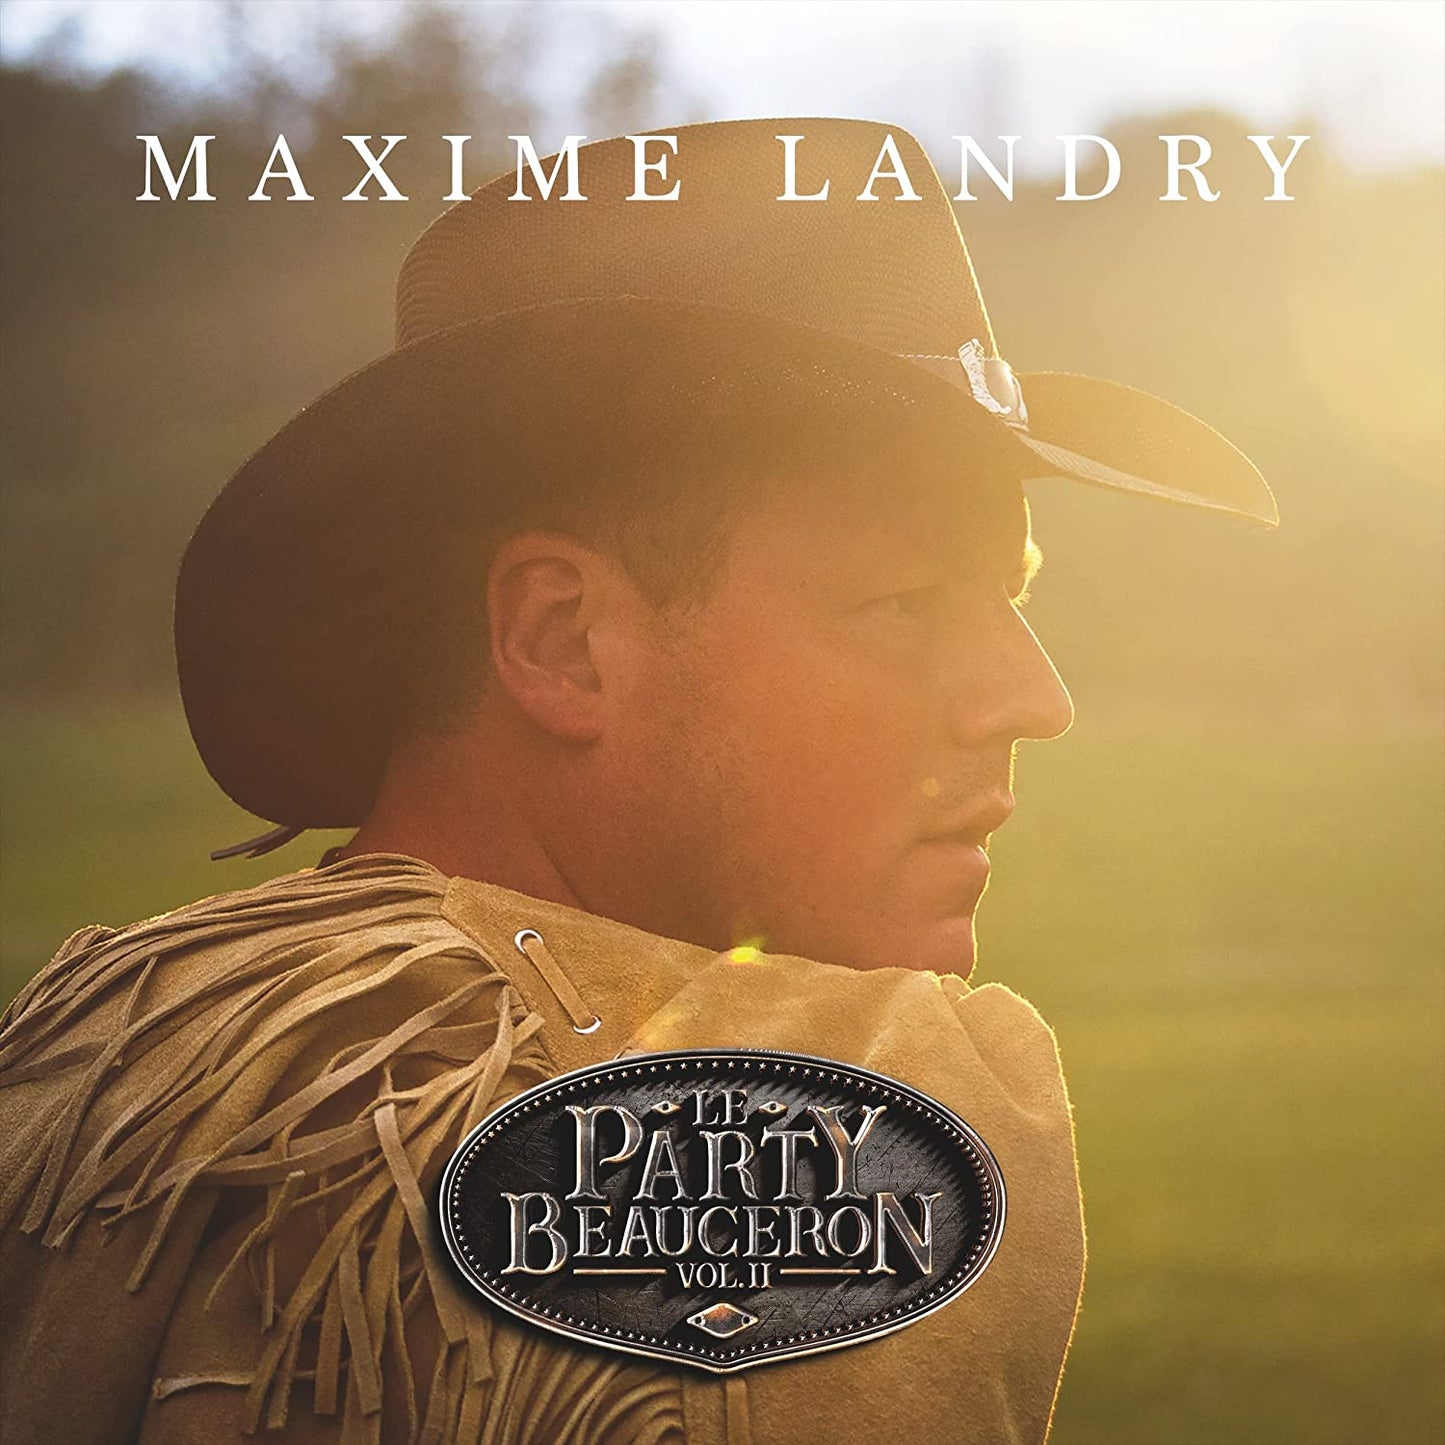 Le party beauceron Vol.2 [Audio CD] Maxime Landry